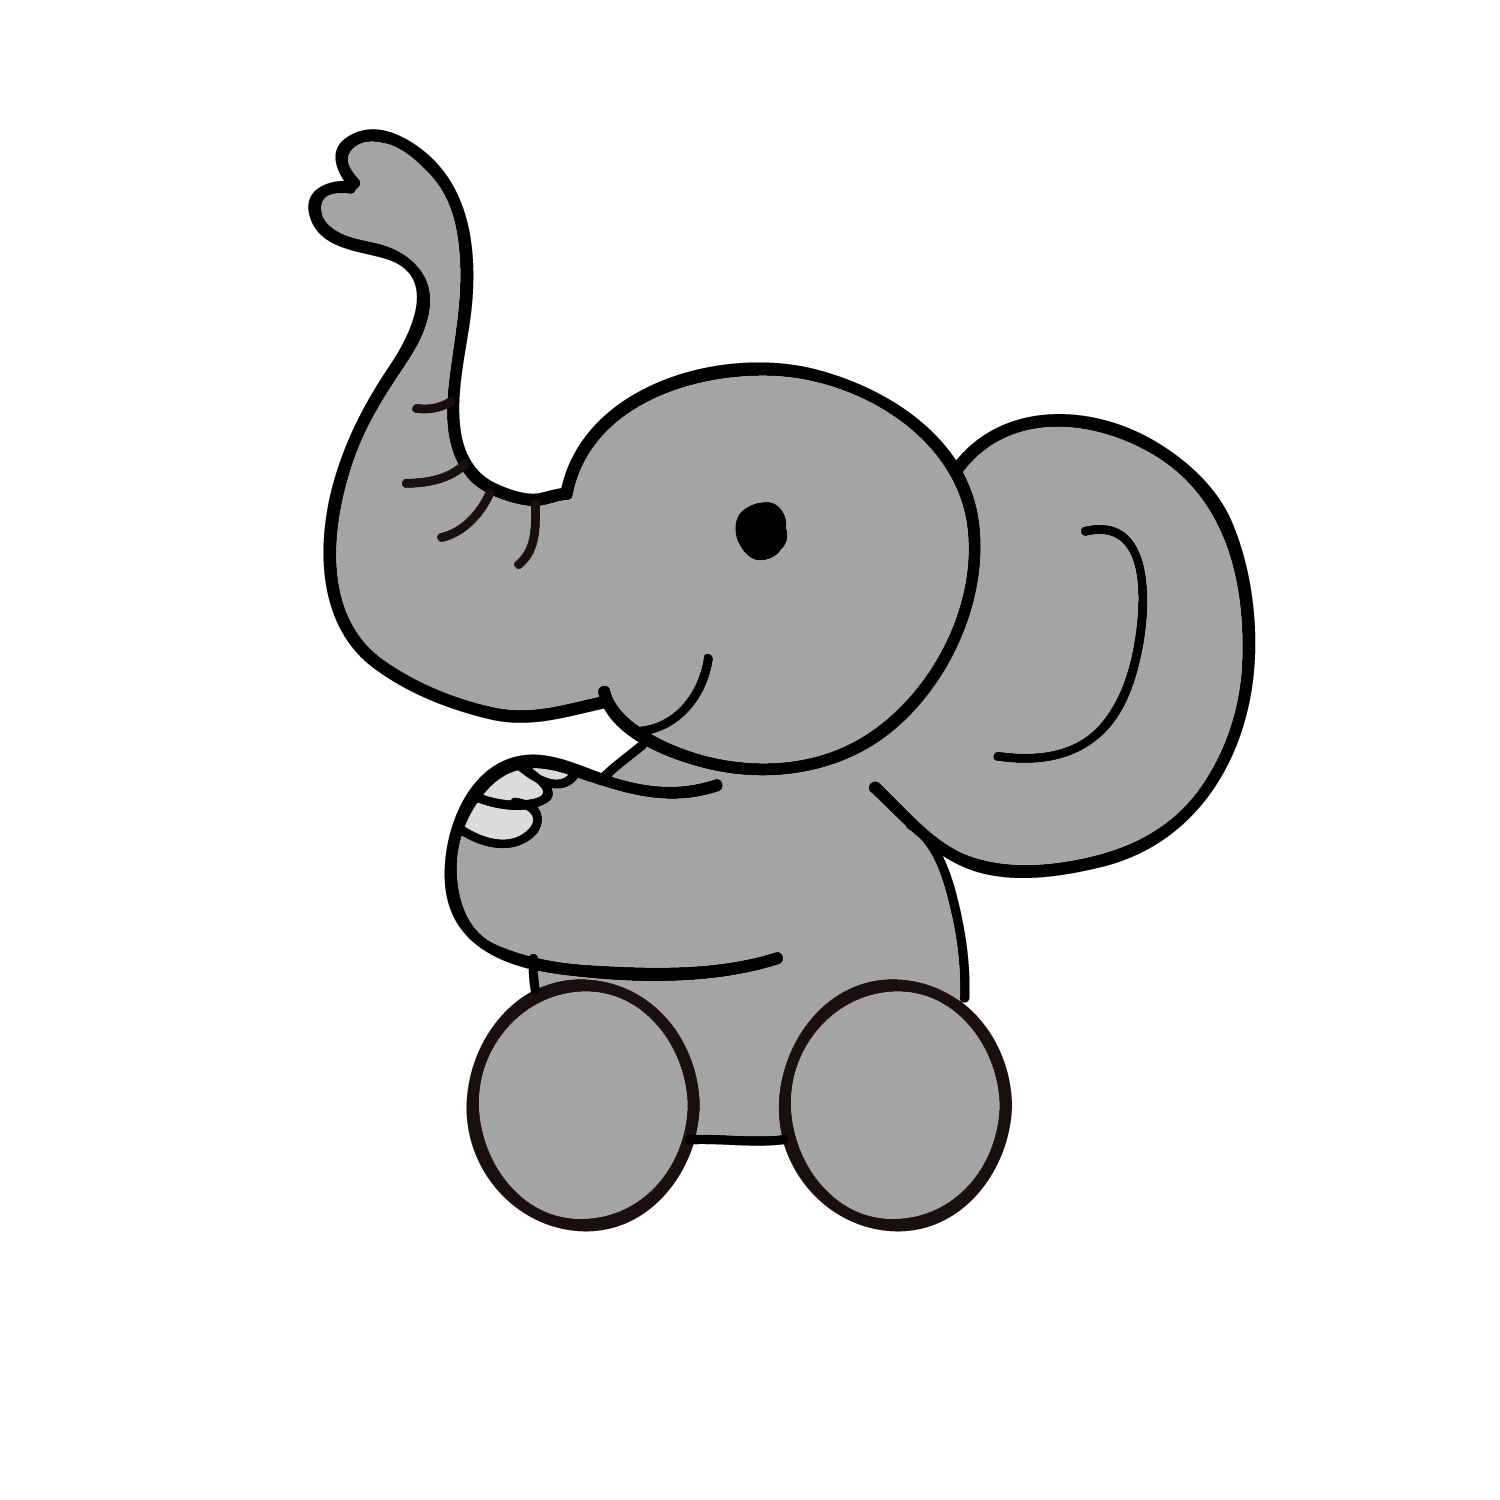 Elephant Cartoon Image - Clipart library